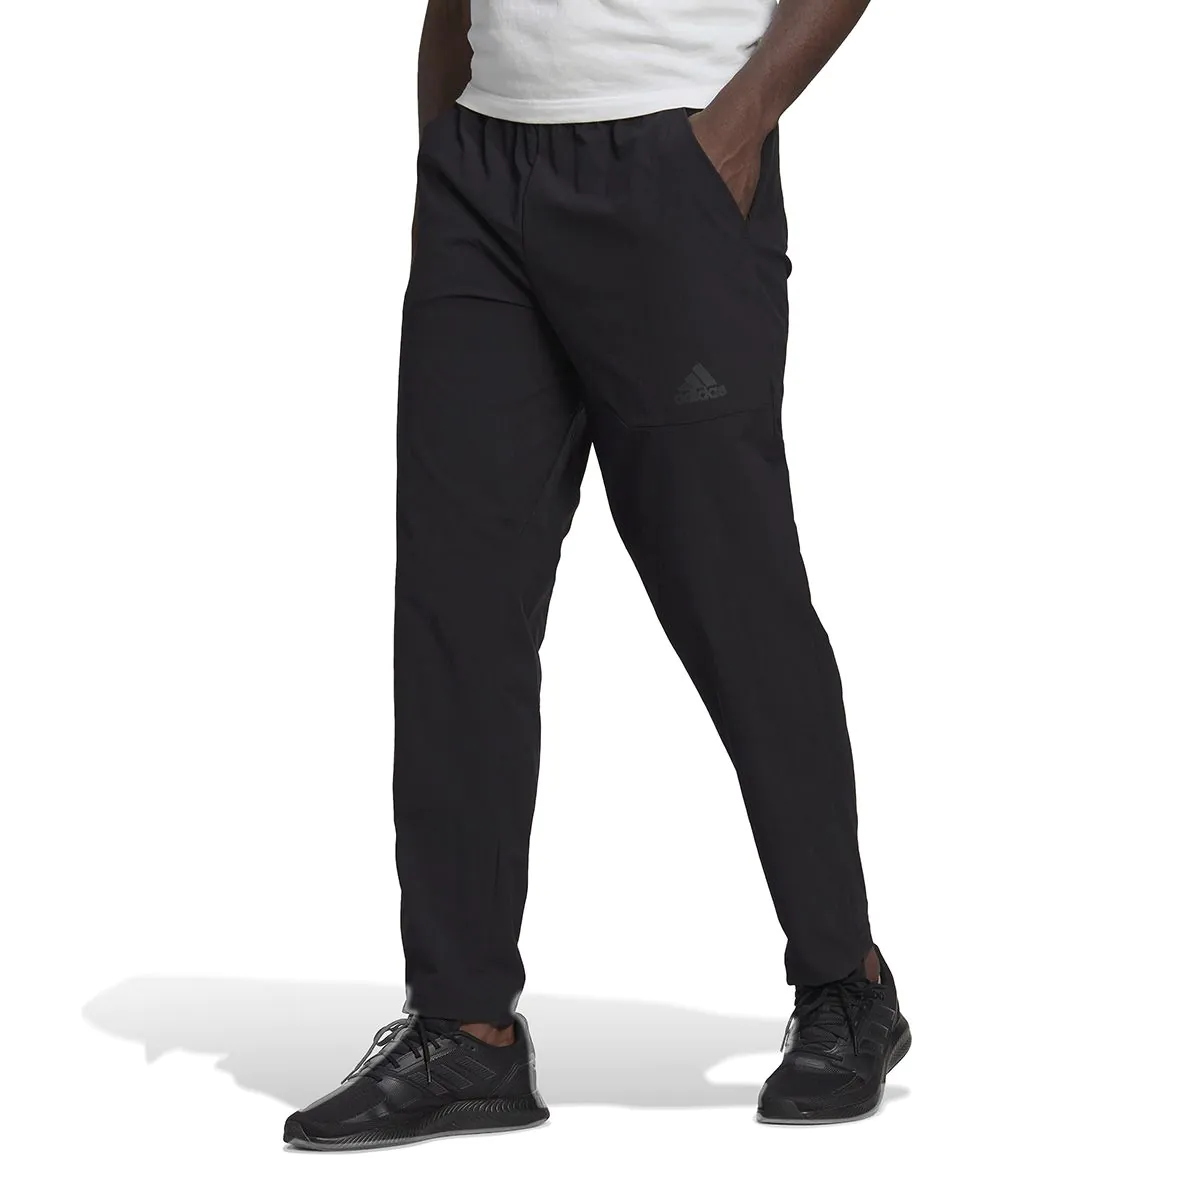  adidas Men's 3-Stripe Pants, Black/White, Small